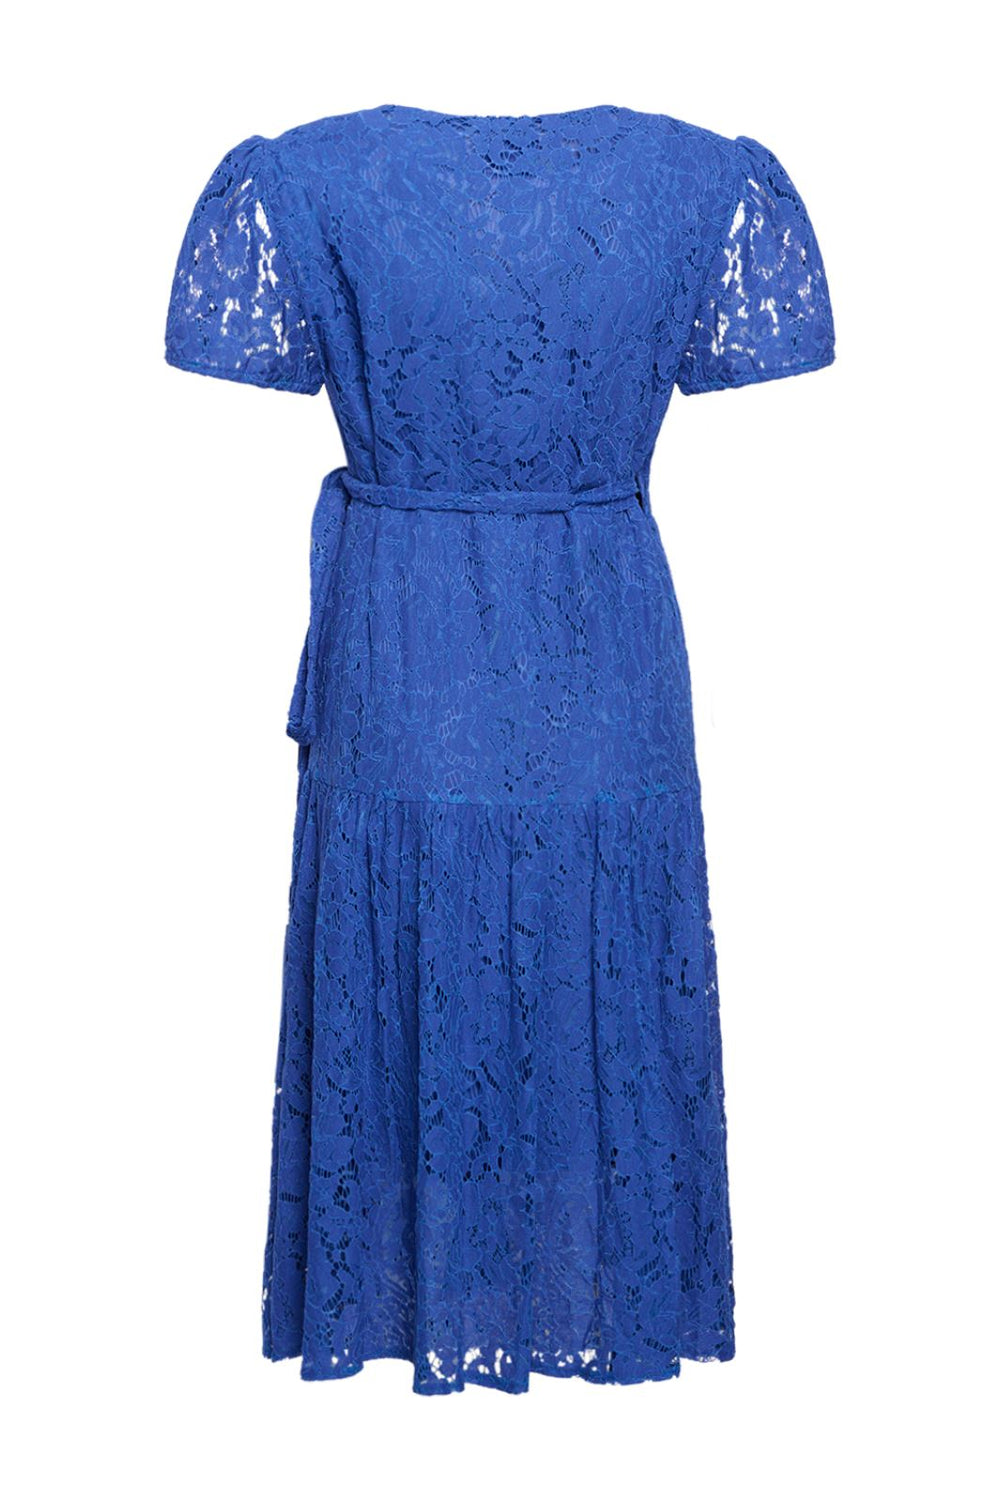 Noella - Briston Dress - Royal Blue Kjoler 